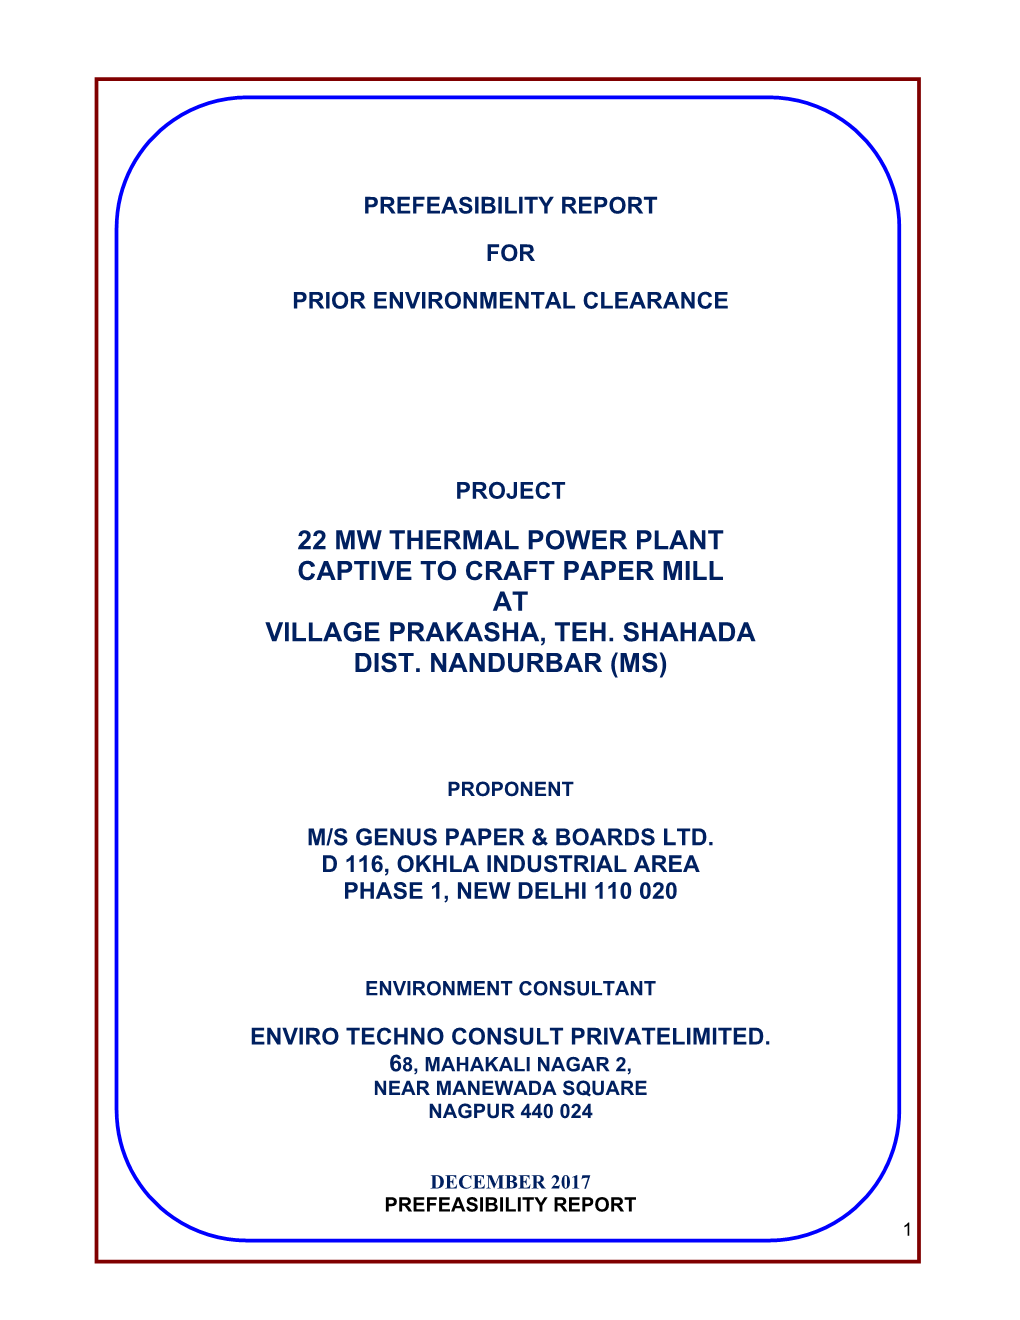 22 Mw Thermal Power Plant Captive to Craft Paper Mill at Village Prakasha, Teh. Shahada Dist. Nandurbar (Ms)